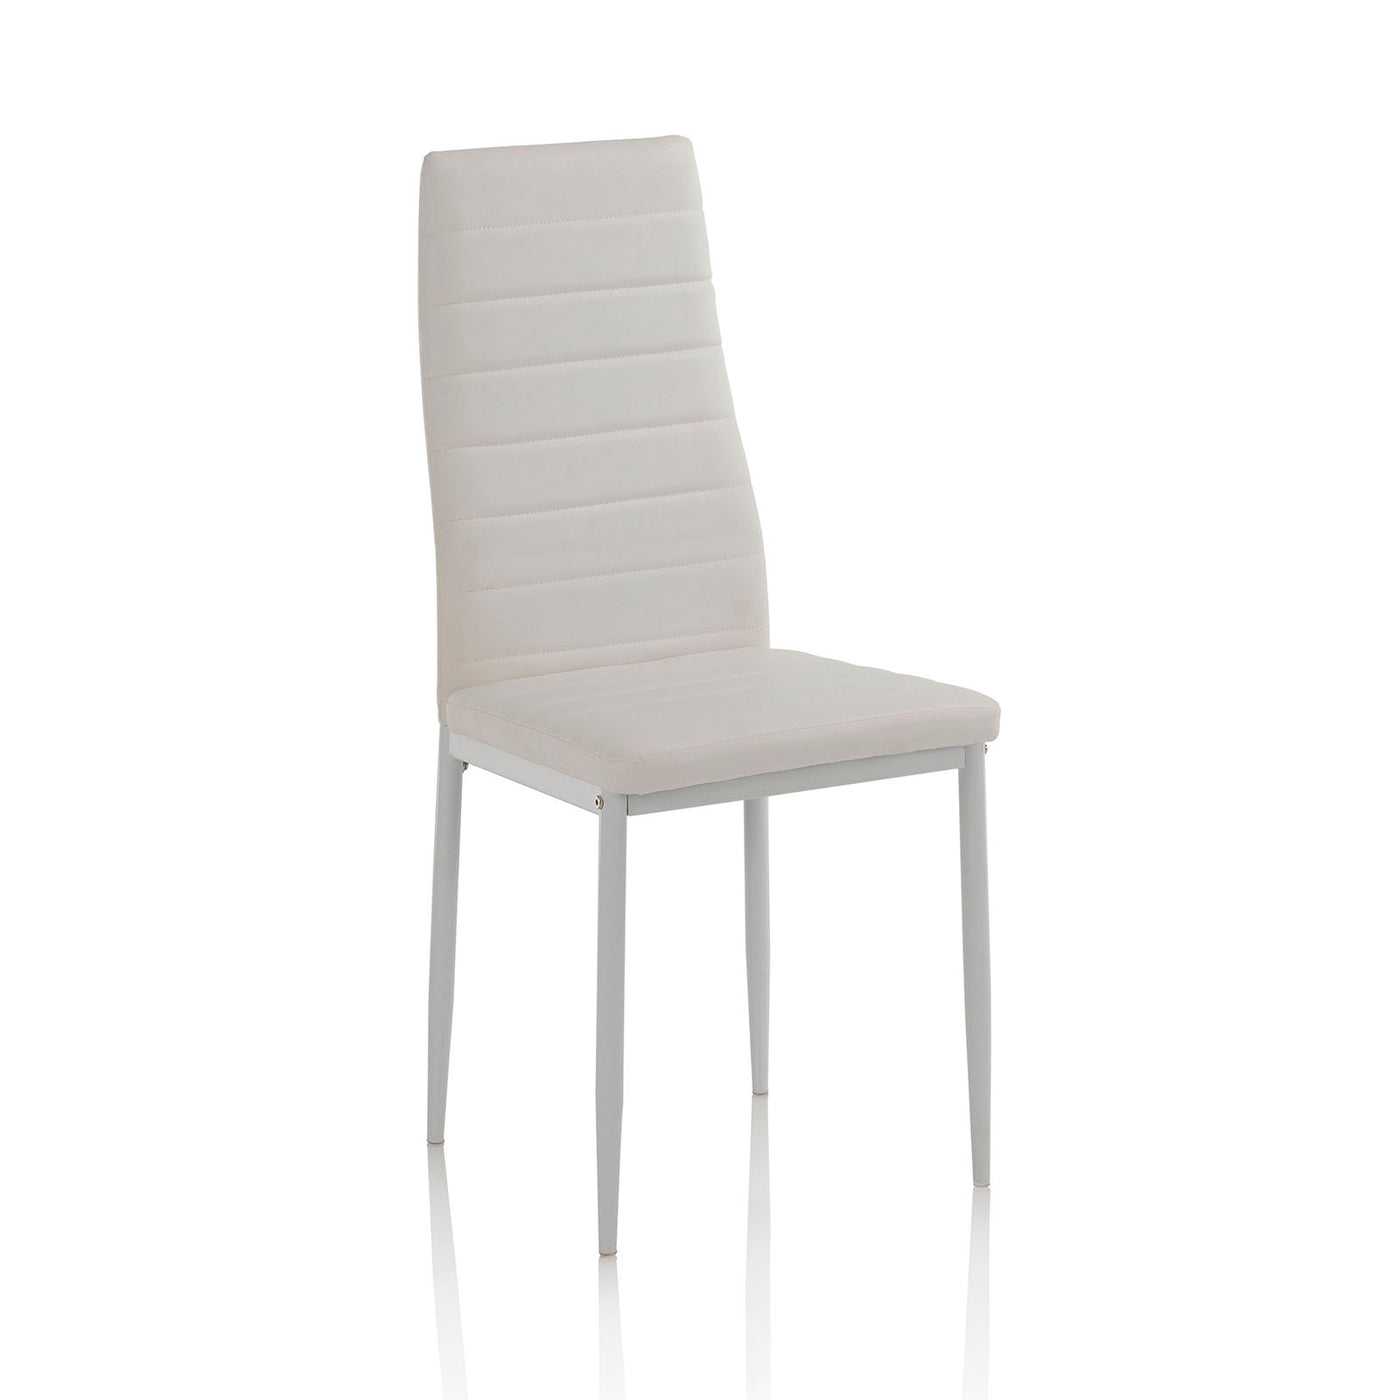 Set of 4 CAROLINA White Chairs